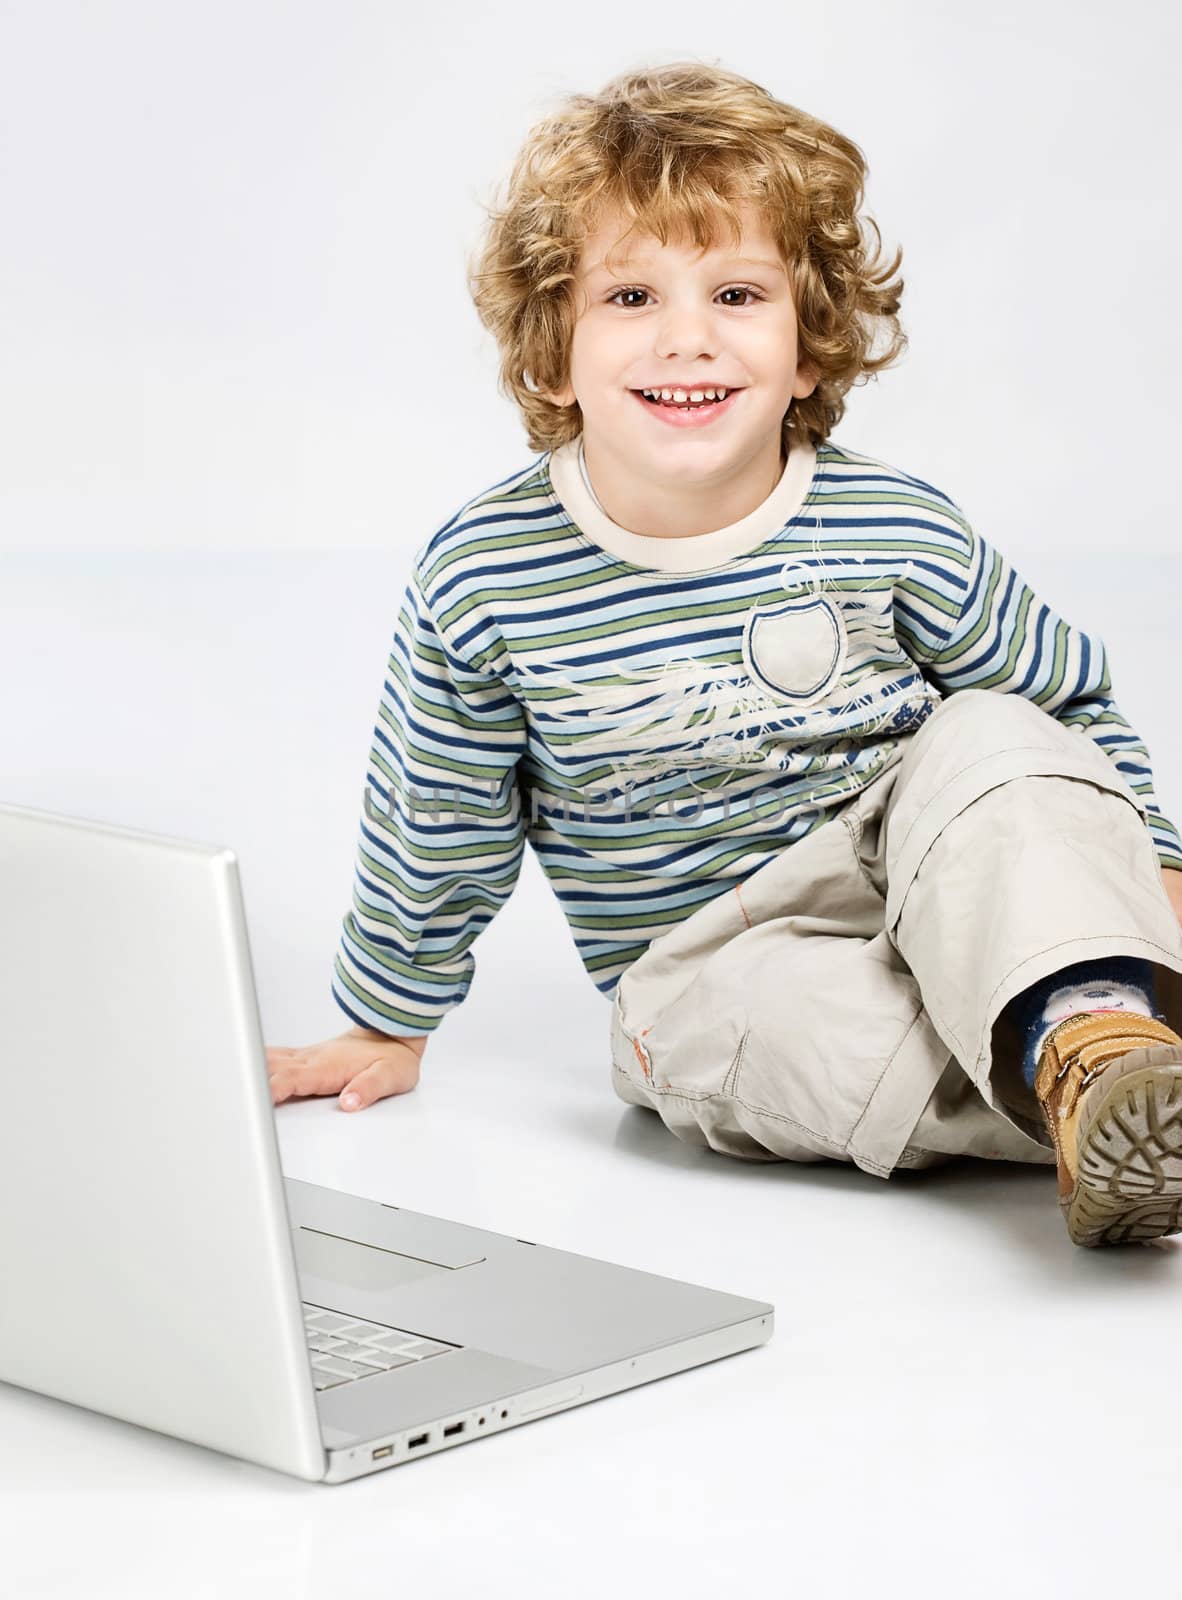 Blue curl hair boy seating near laptop by imarin